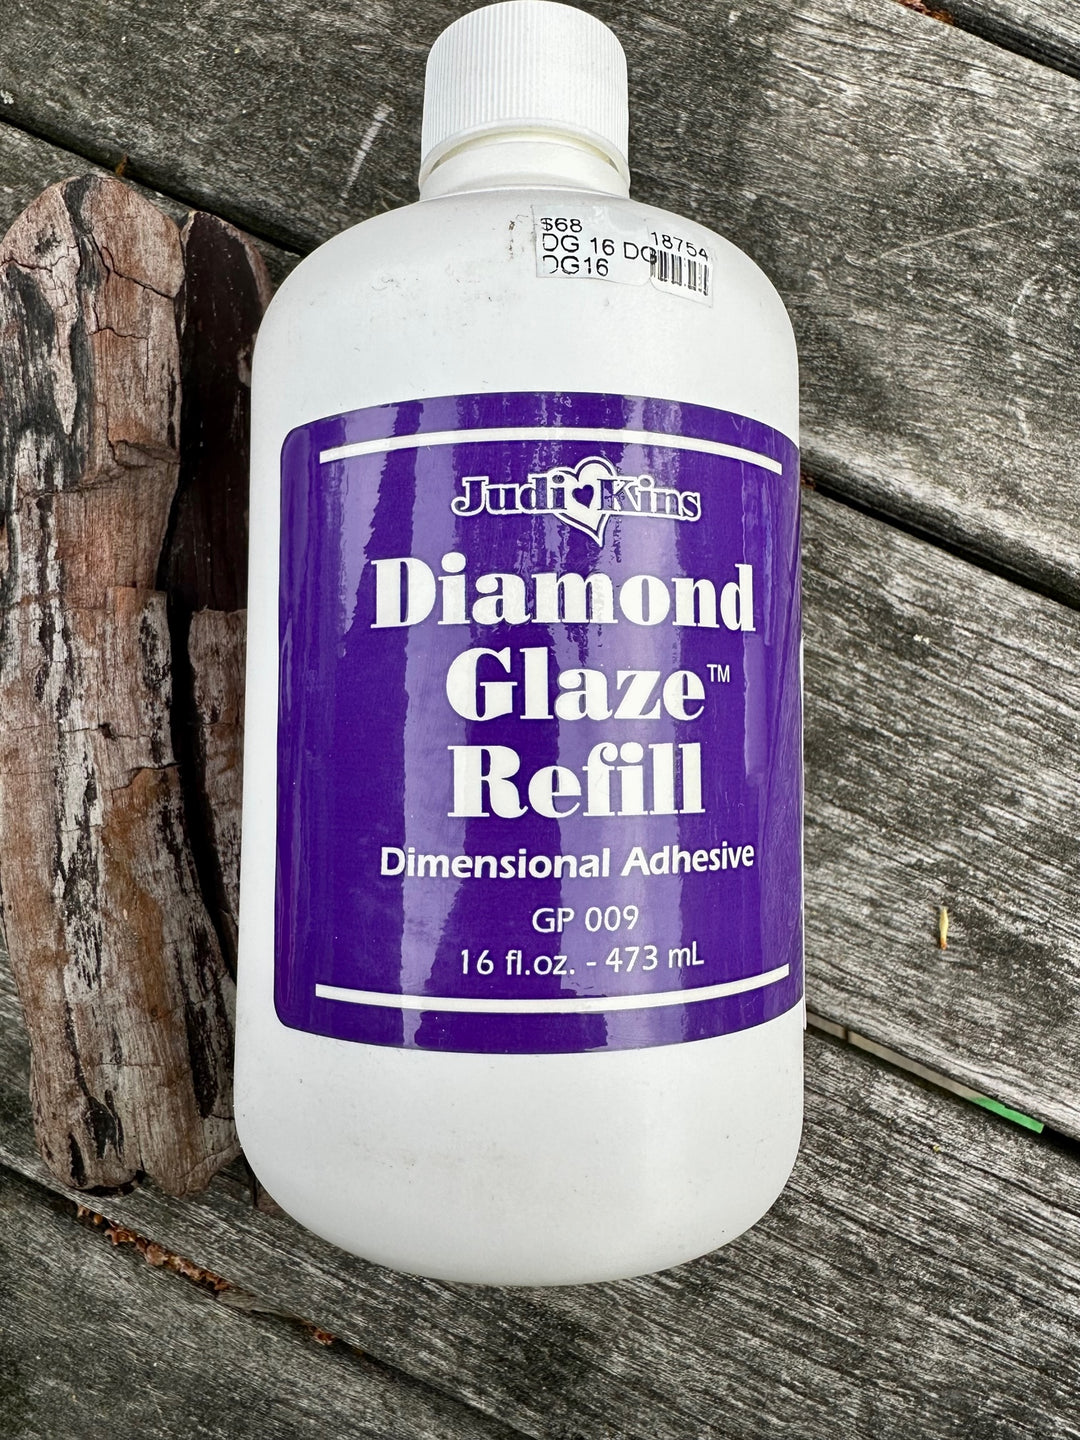 Judikins Diamond Glaze 10ml Dimensional Clear Adhesive - AUSTRALIA